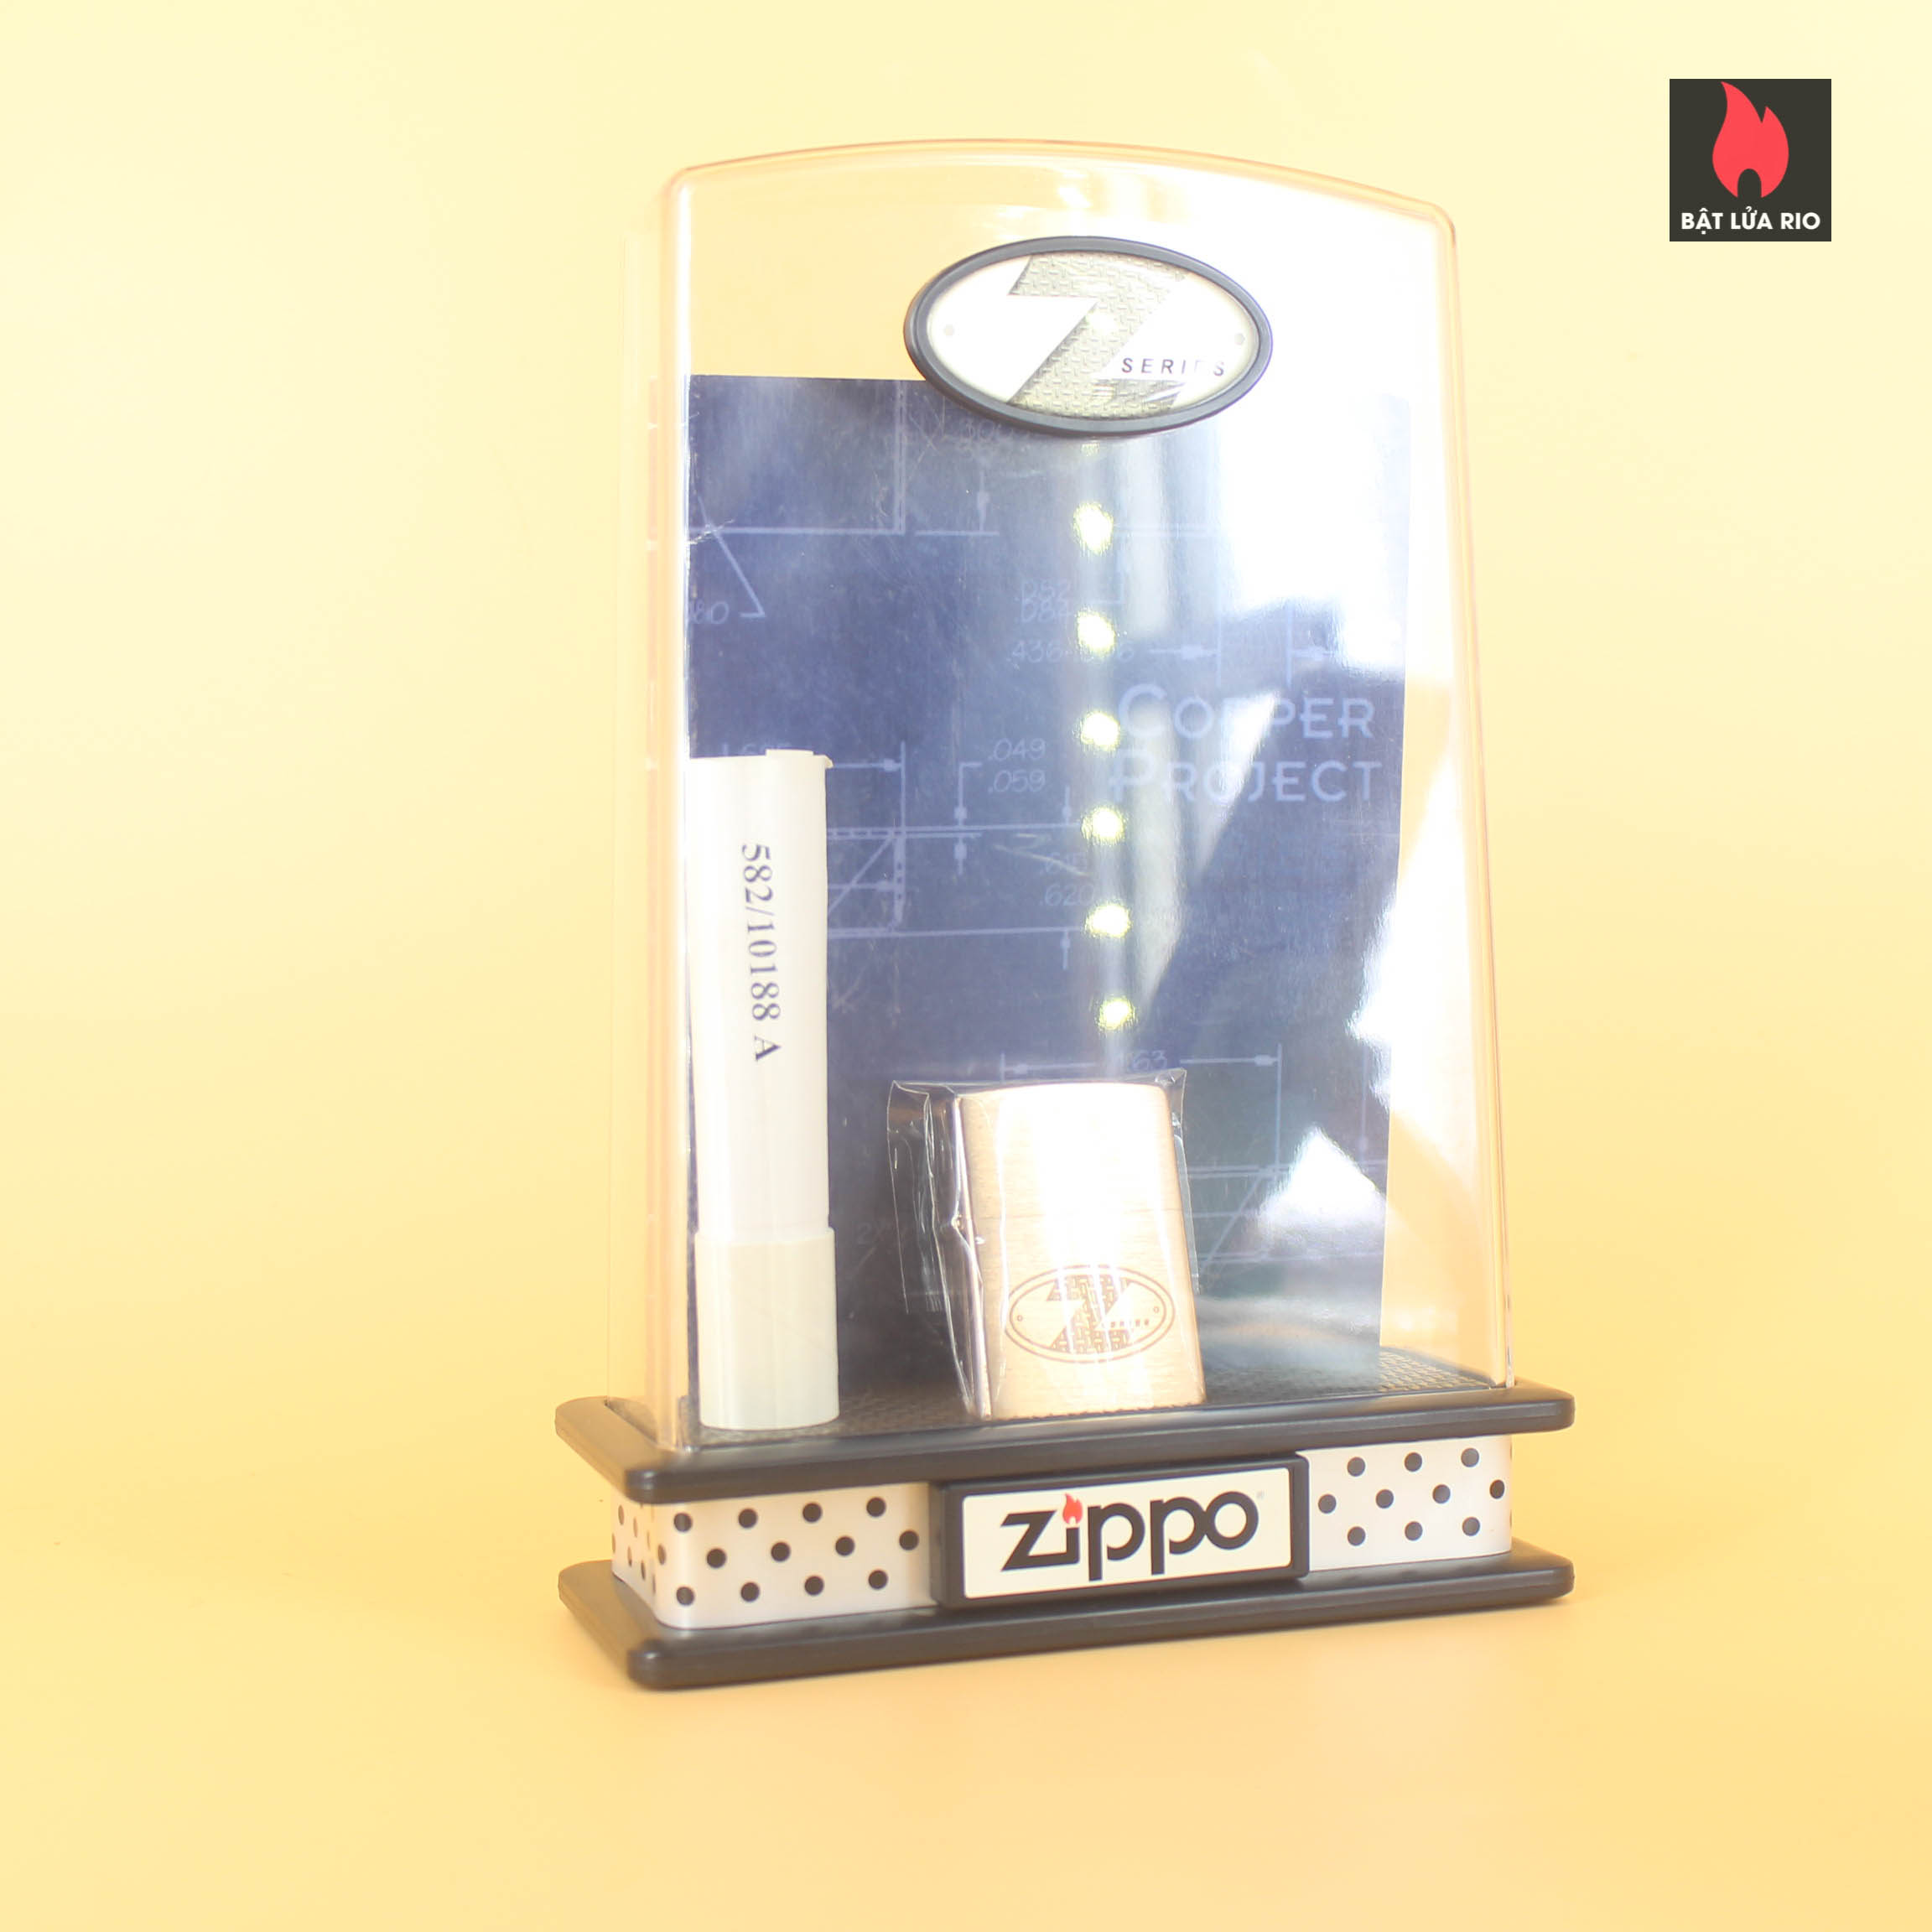 Zippo 2002 – Zippo Z-Series Copper Project – USA - Limited 582/10188 A 1